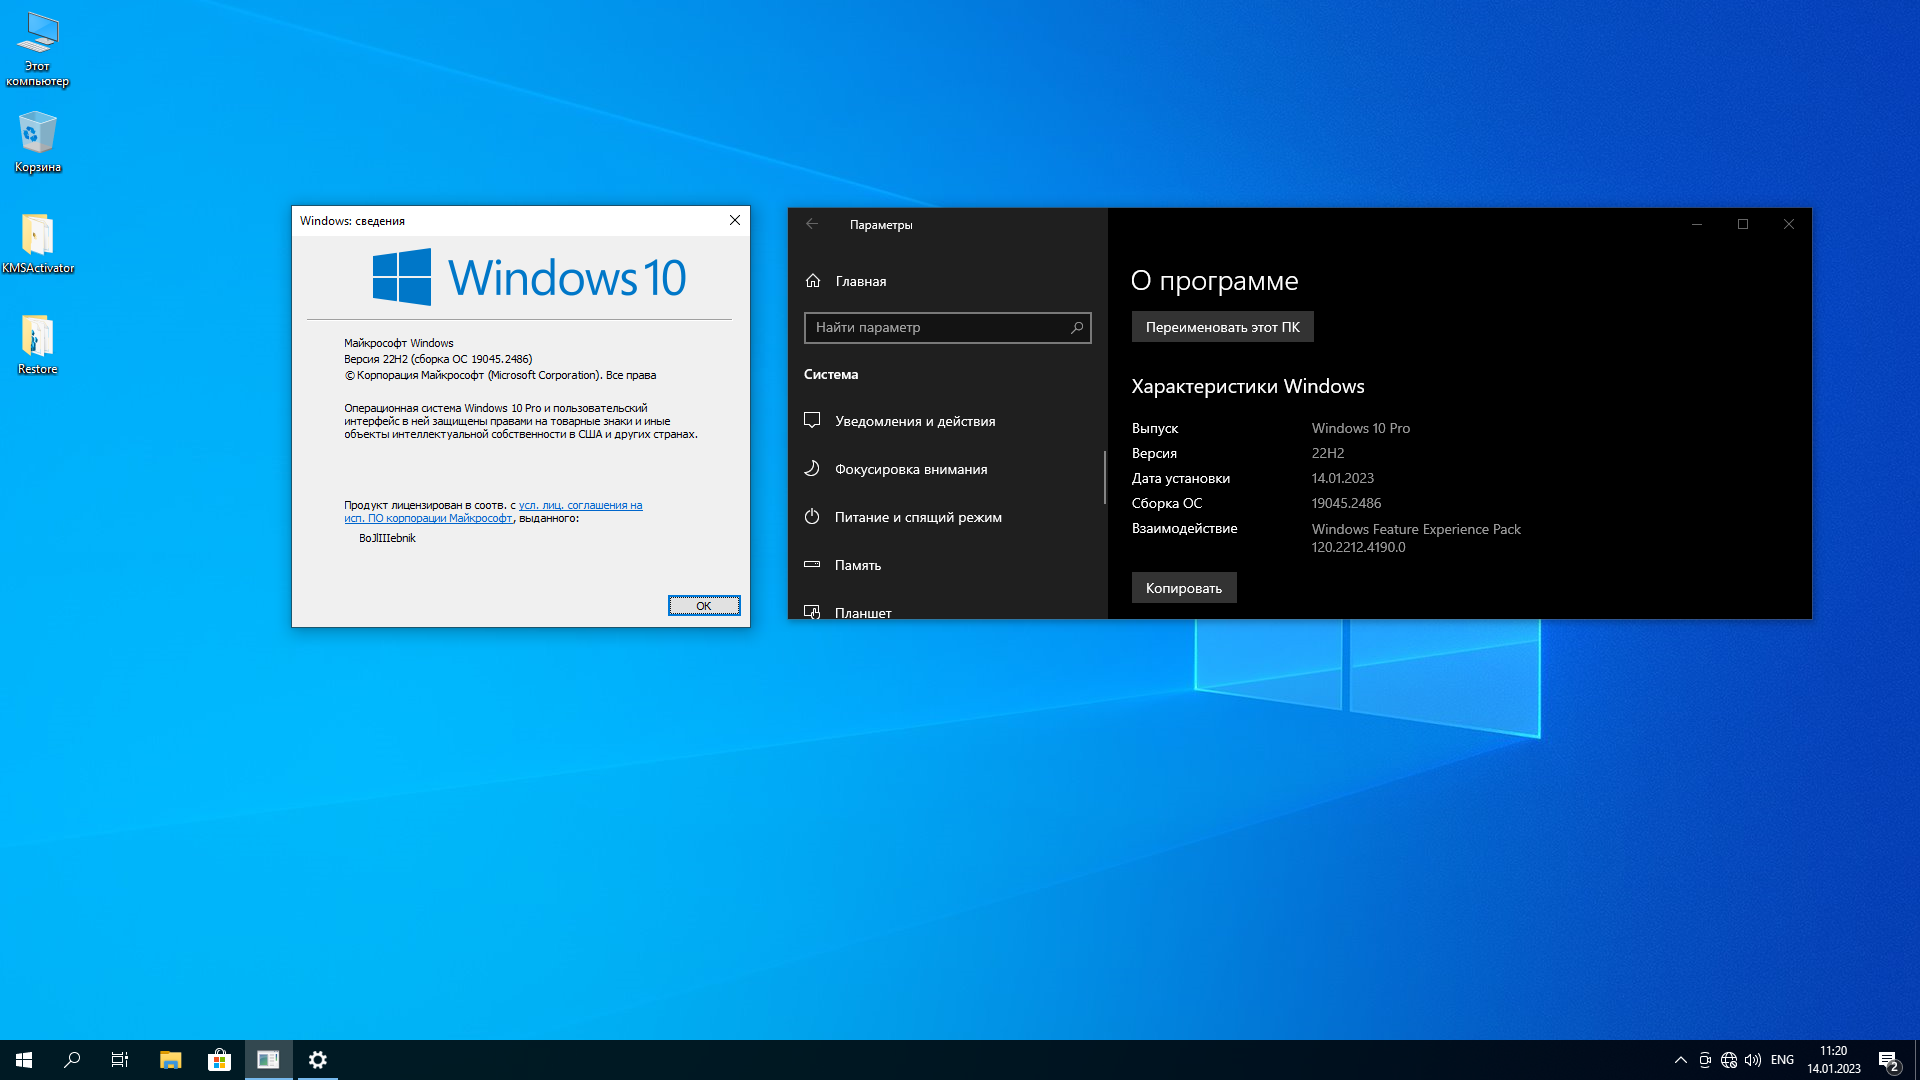 Версии windows 10 домашняя. Windows 10 версии. Windows 10 сборки. Виндовс 10 22h2. Windows 10 Pro 22h2.